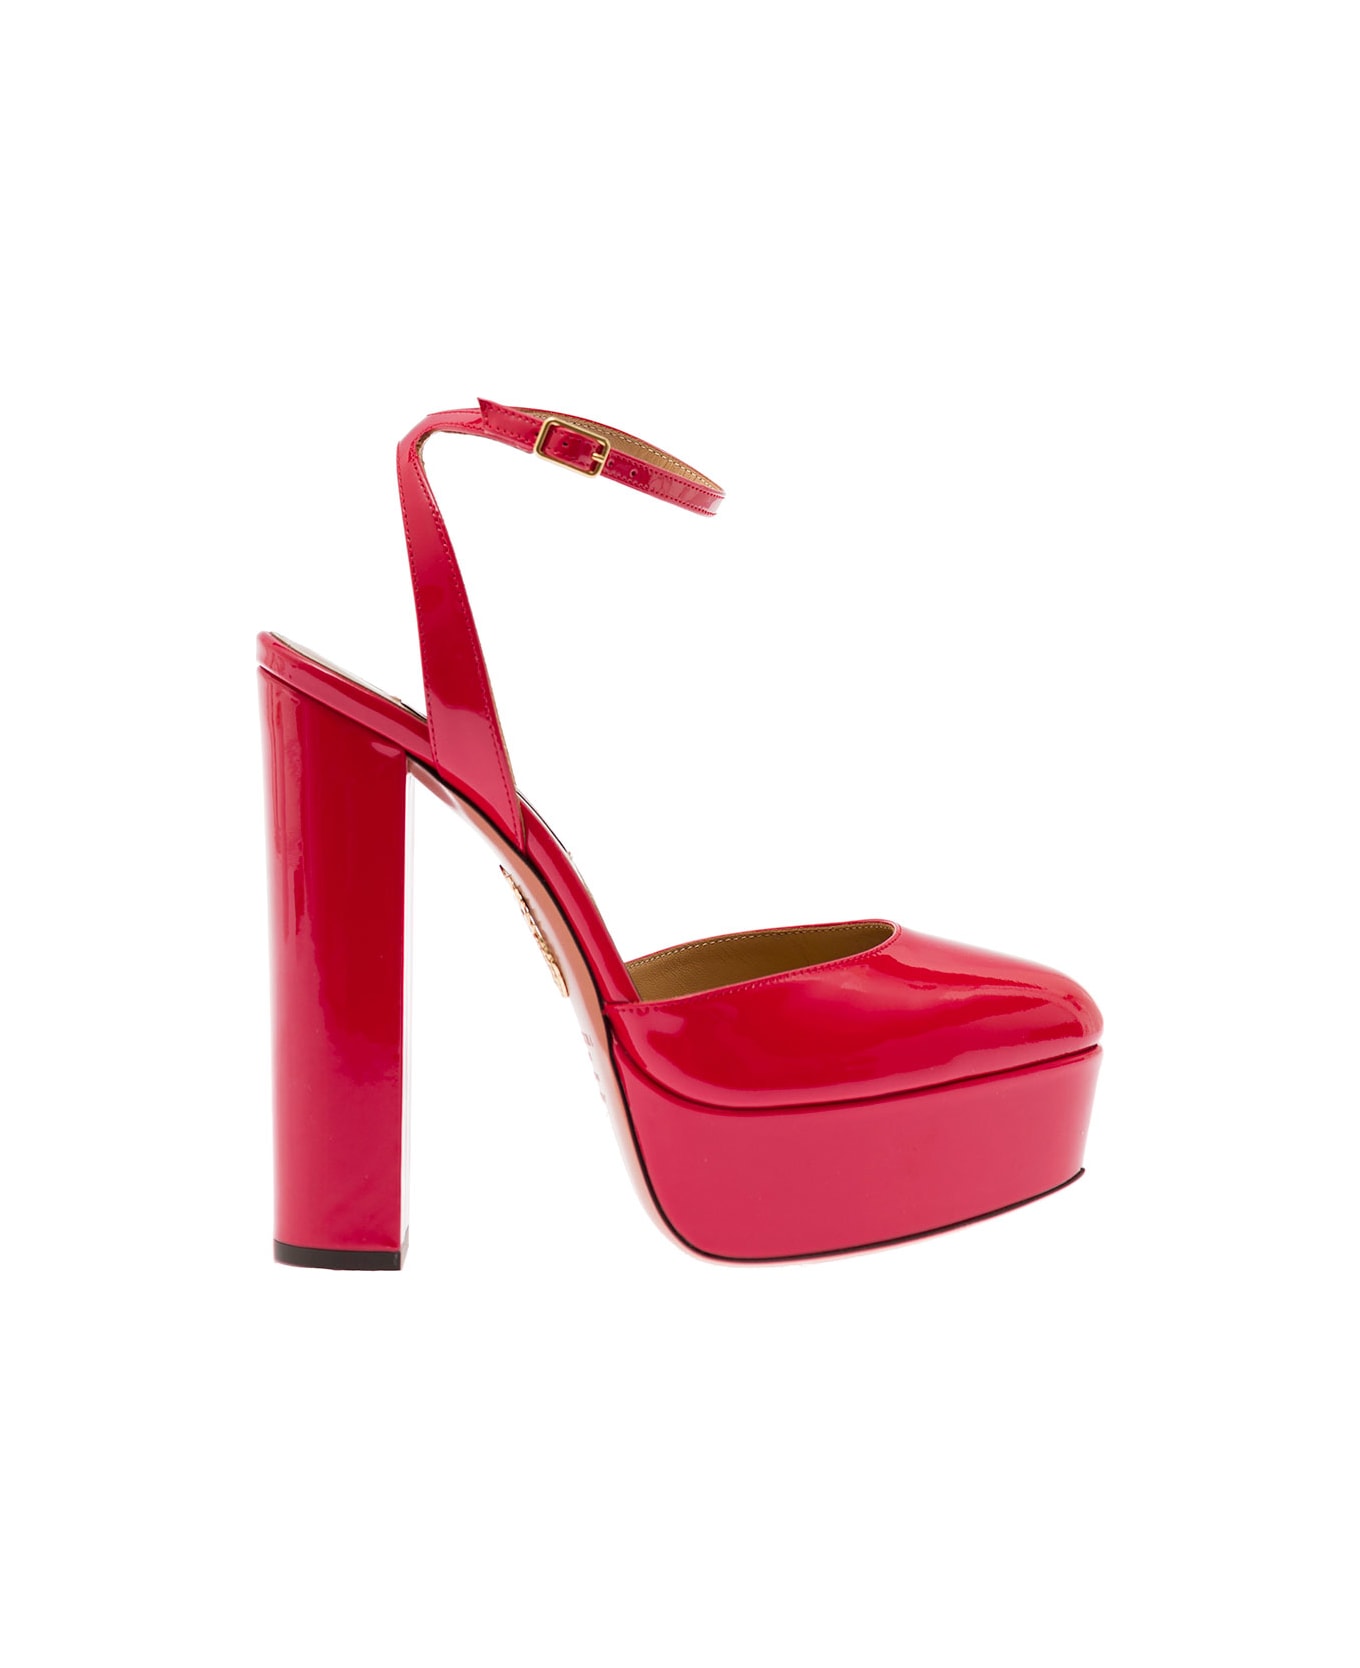 Aquazzura 'so High Plateau' Red Platform Sandals In Glossy Patent Leather Woman Aquazzura - Red